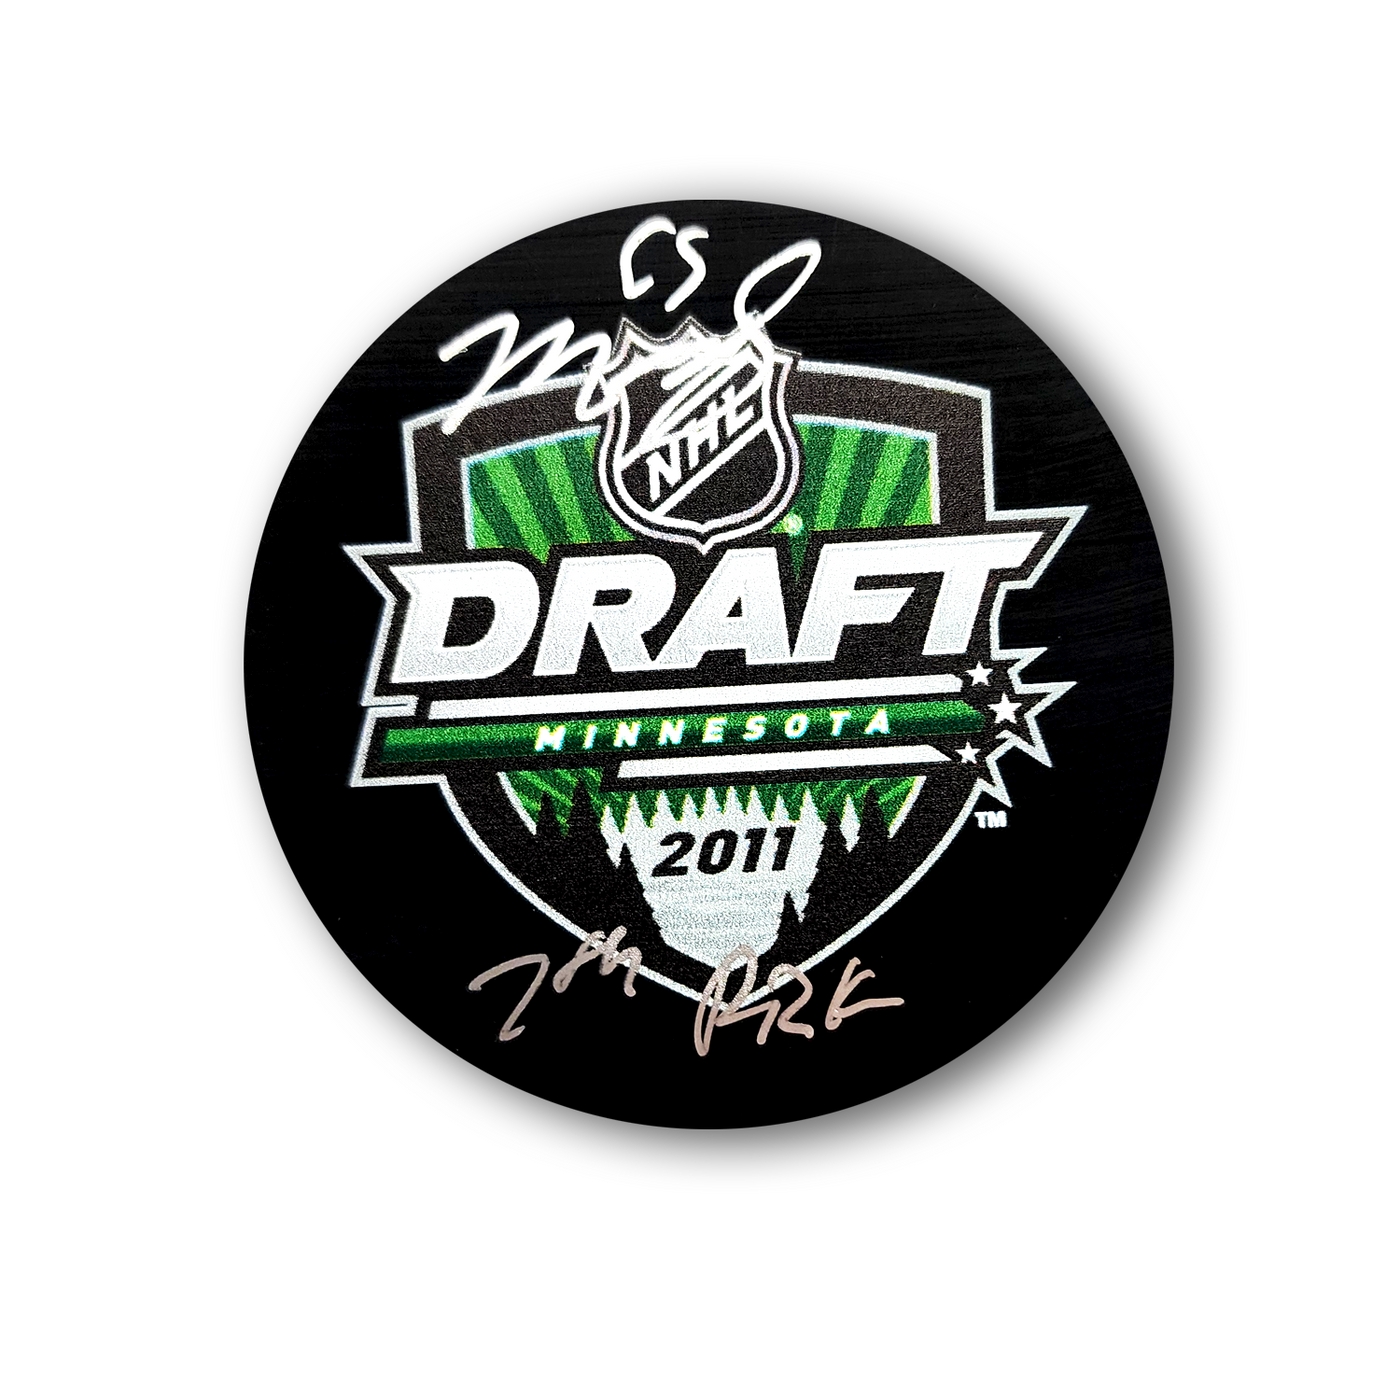 Mark Scheifele 2011 NHL Draft Autographed Hockey Puck Inscribed 7th Pick